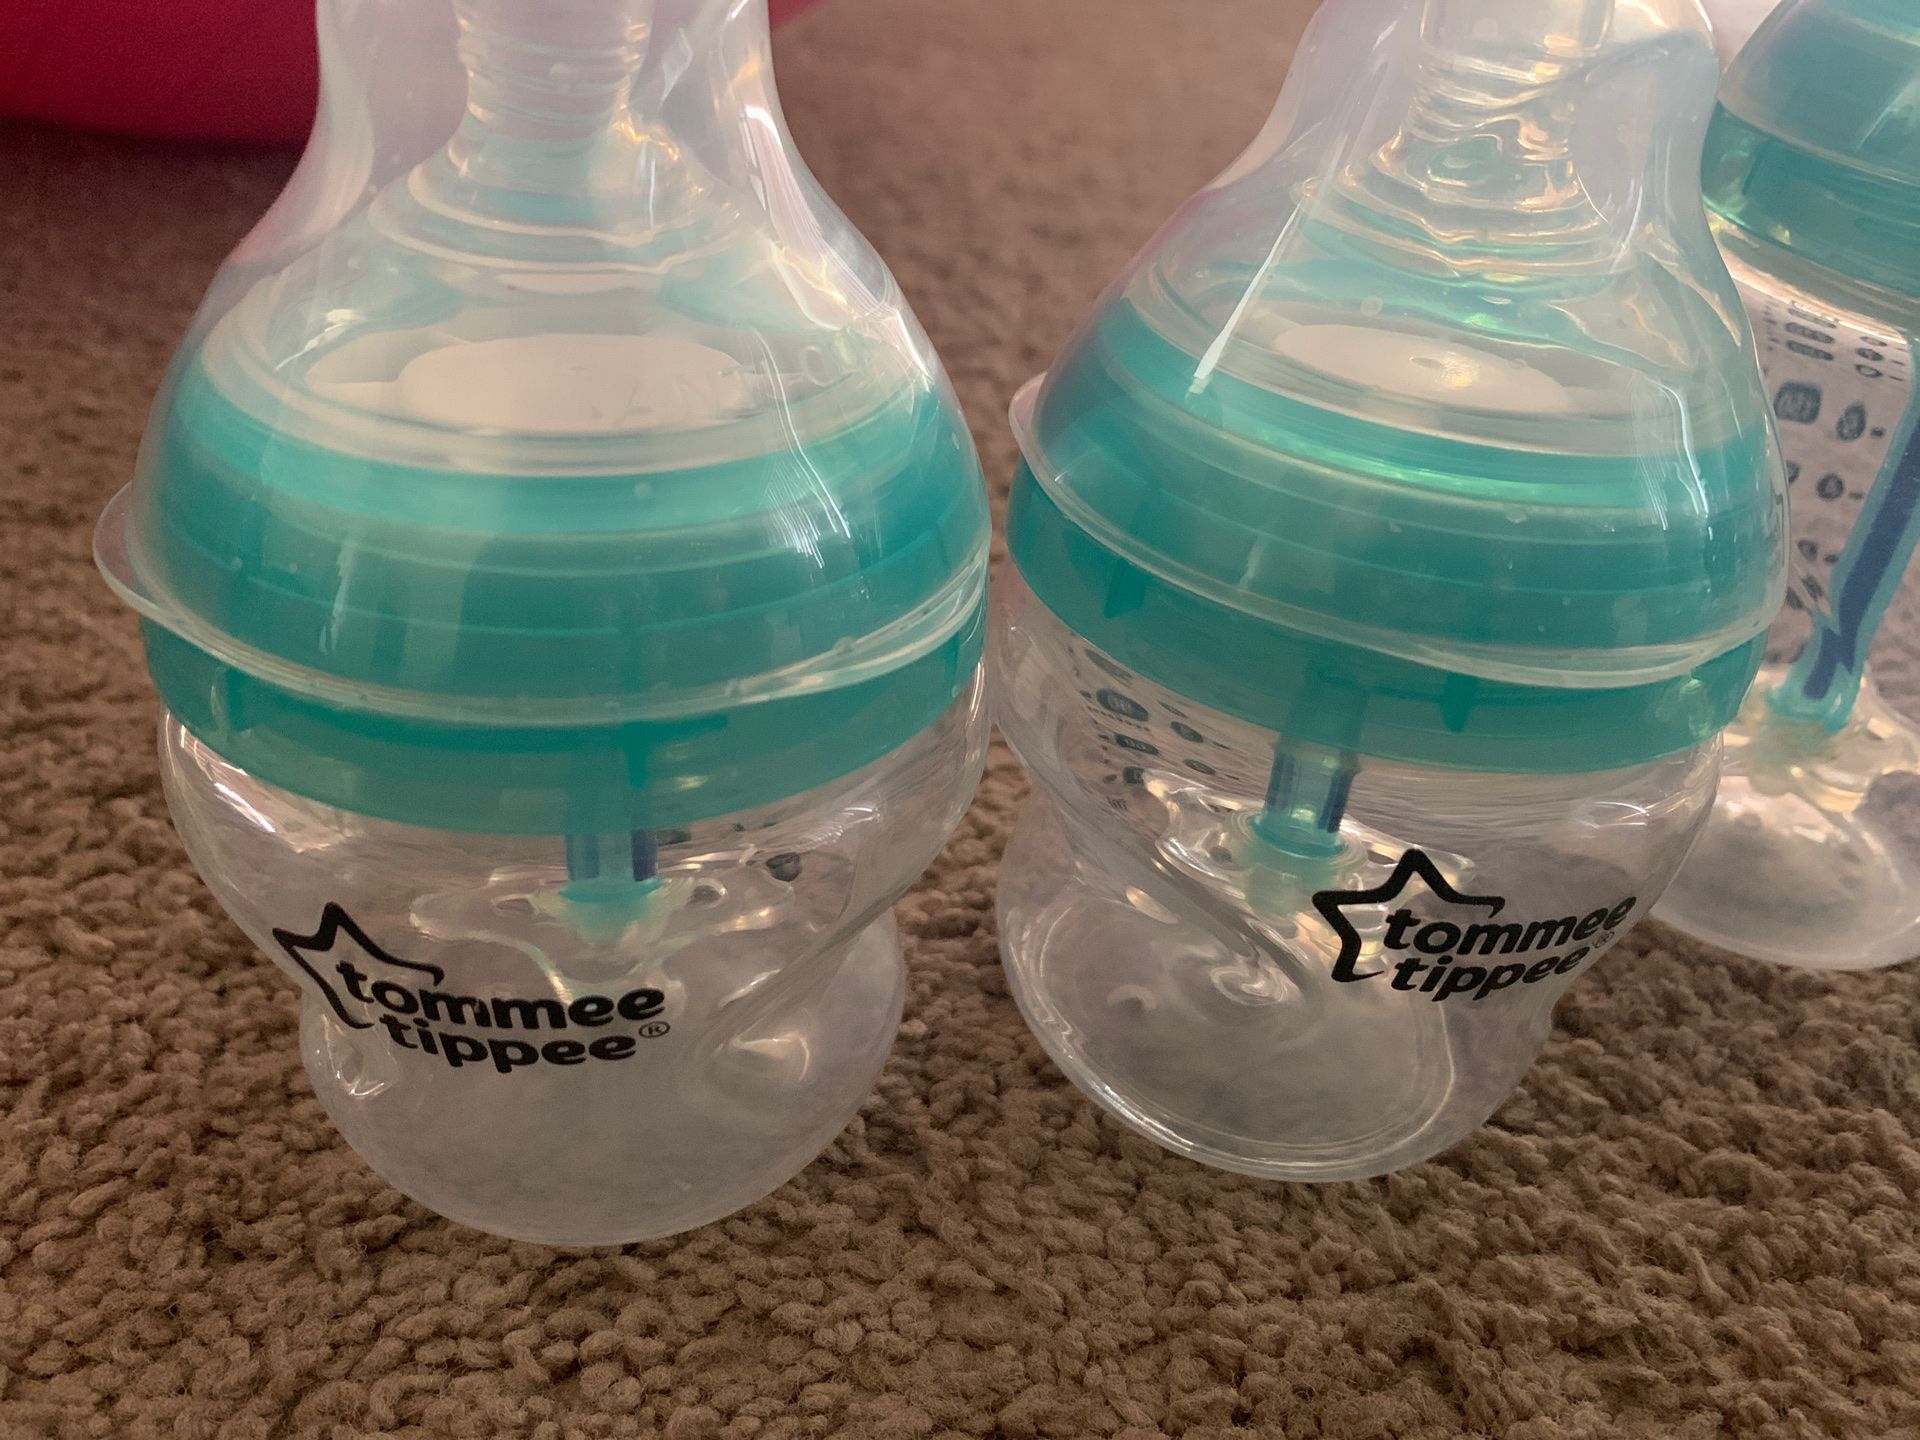 Infant bottles